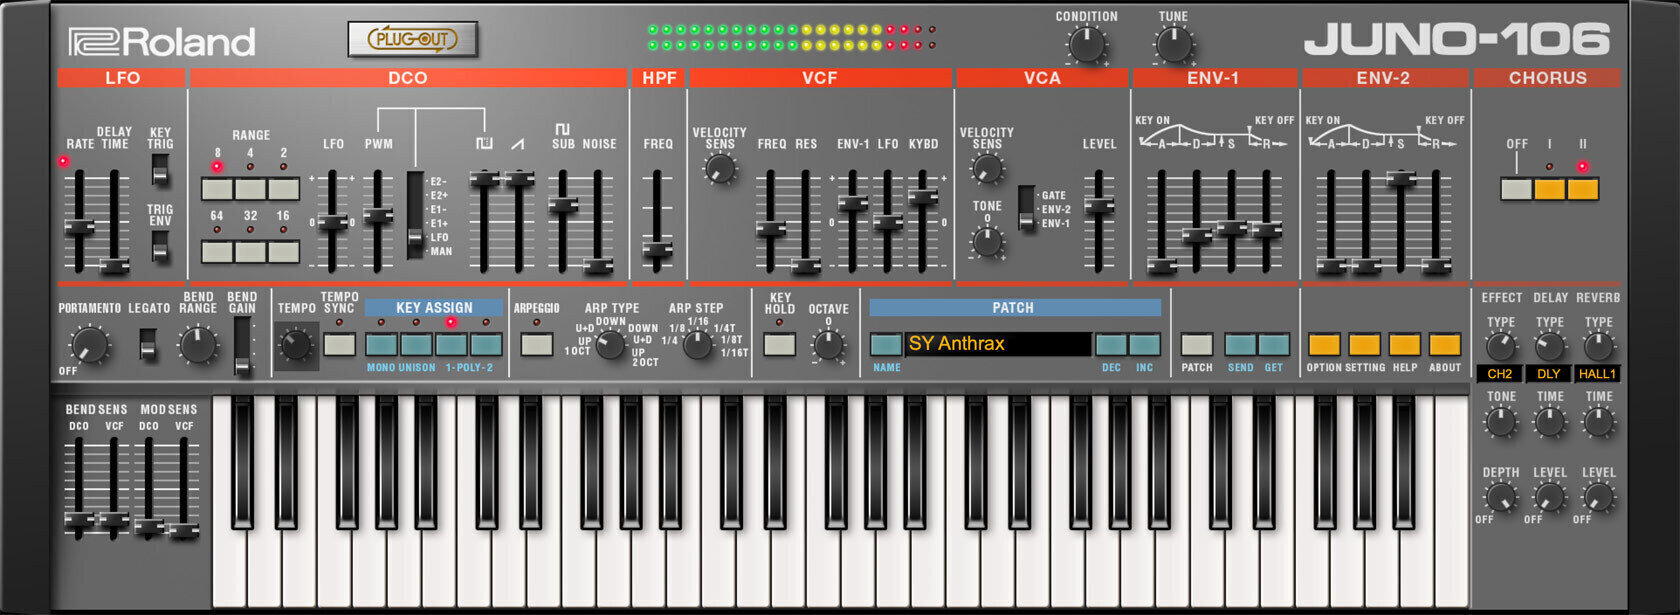 Tonstudio-Software VST-Instrument Roland JUNO-106 Key (Digitales Produkt)